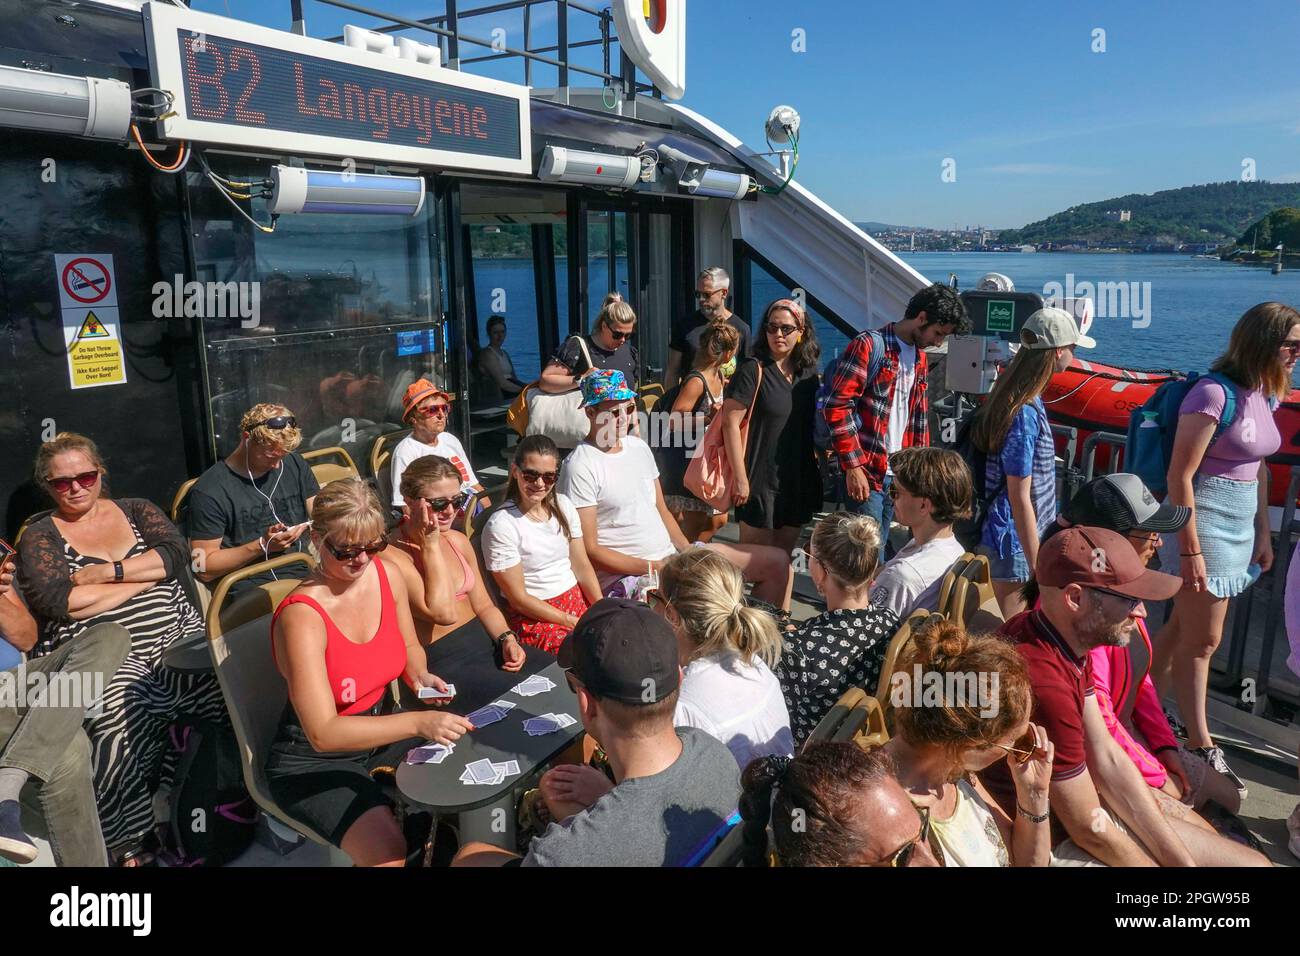 Norway, Oslo, Passengers on a ferry cruising the Oslo fjord.   Photo © Fabio Mazzarella/Sintesi/Alamy Stock Photo Stock Photo